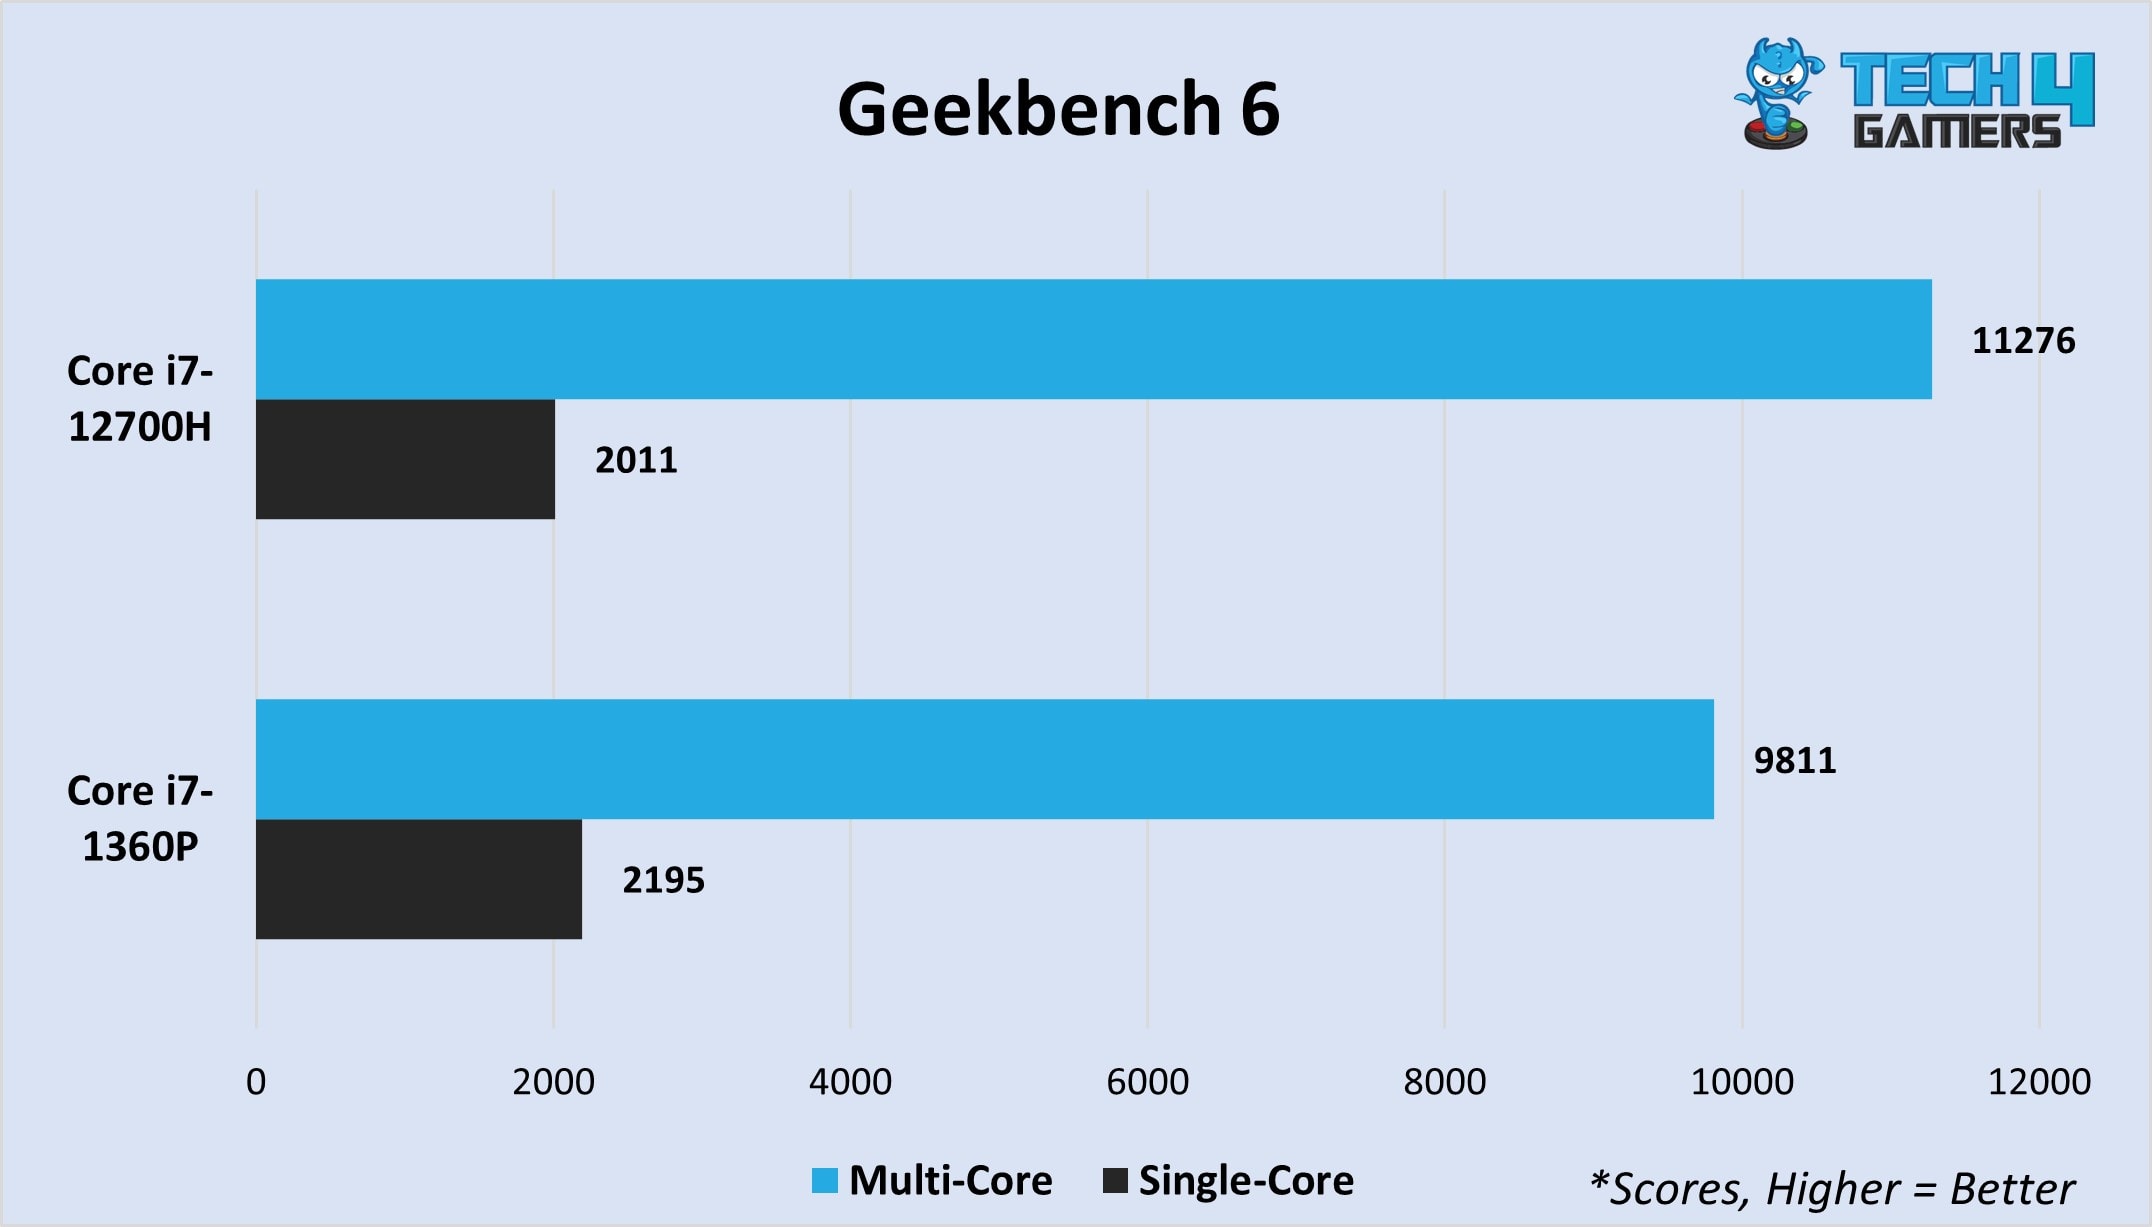 Geekbench 6 multi-core and single-core